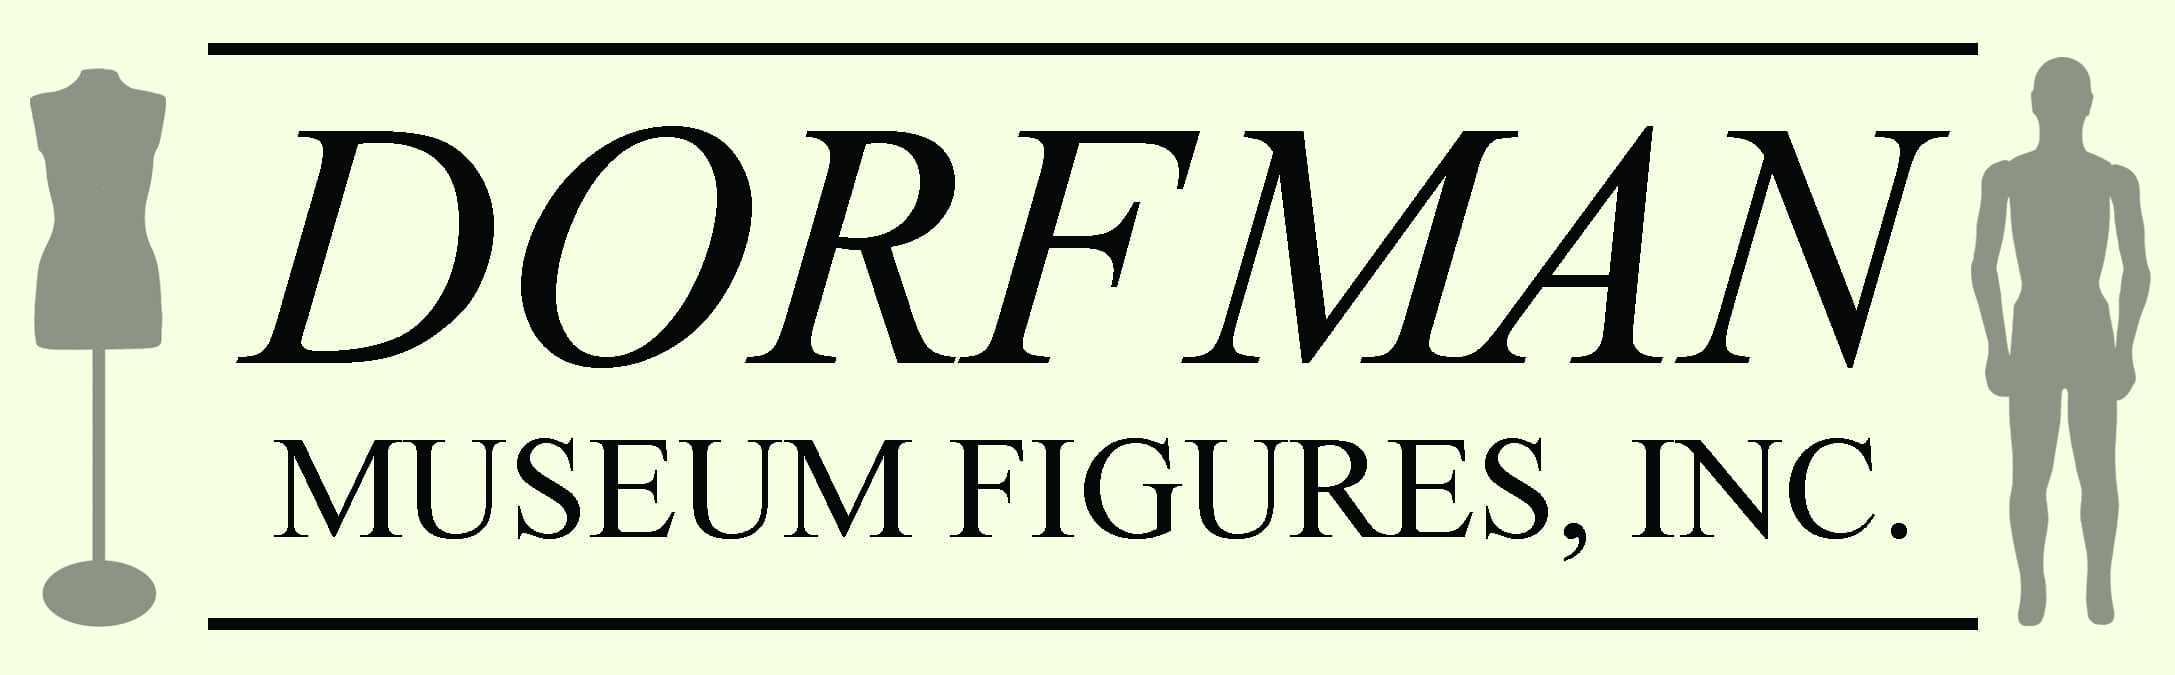 Dorman Museum Figures, Inc. logo